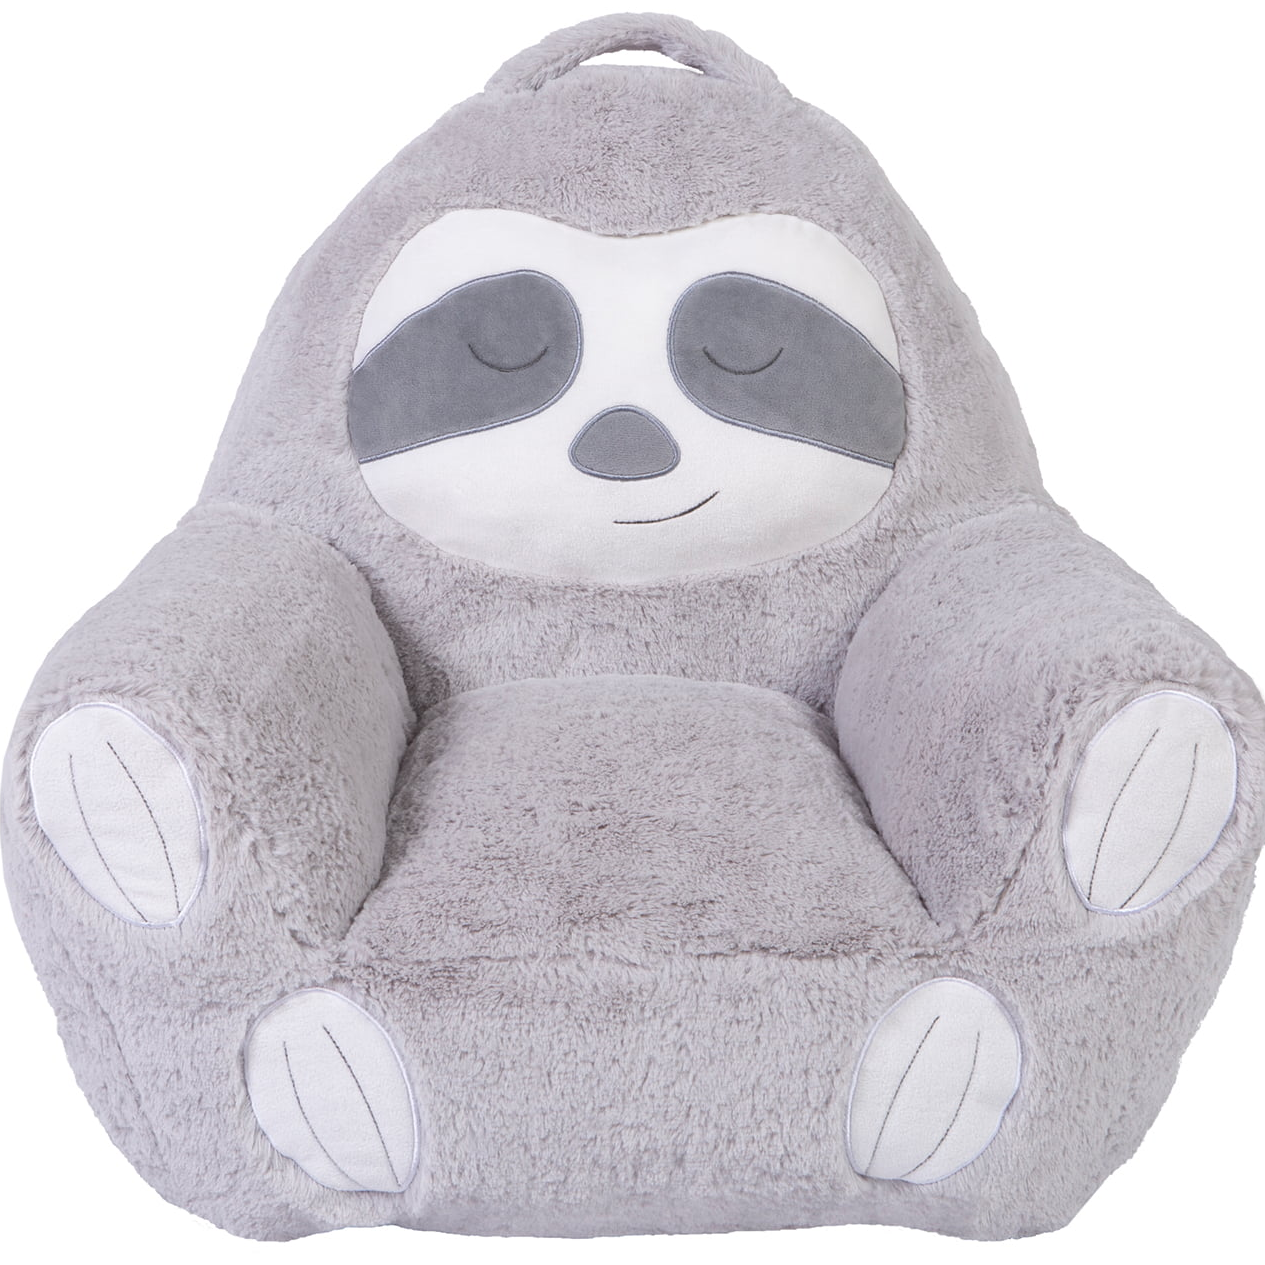 Cuddo Buddies Gray Sloth Plush Character Chair - image 1 of 14